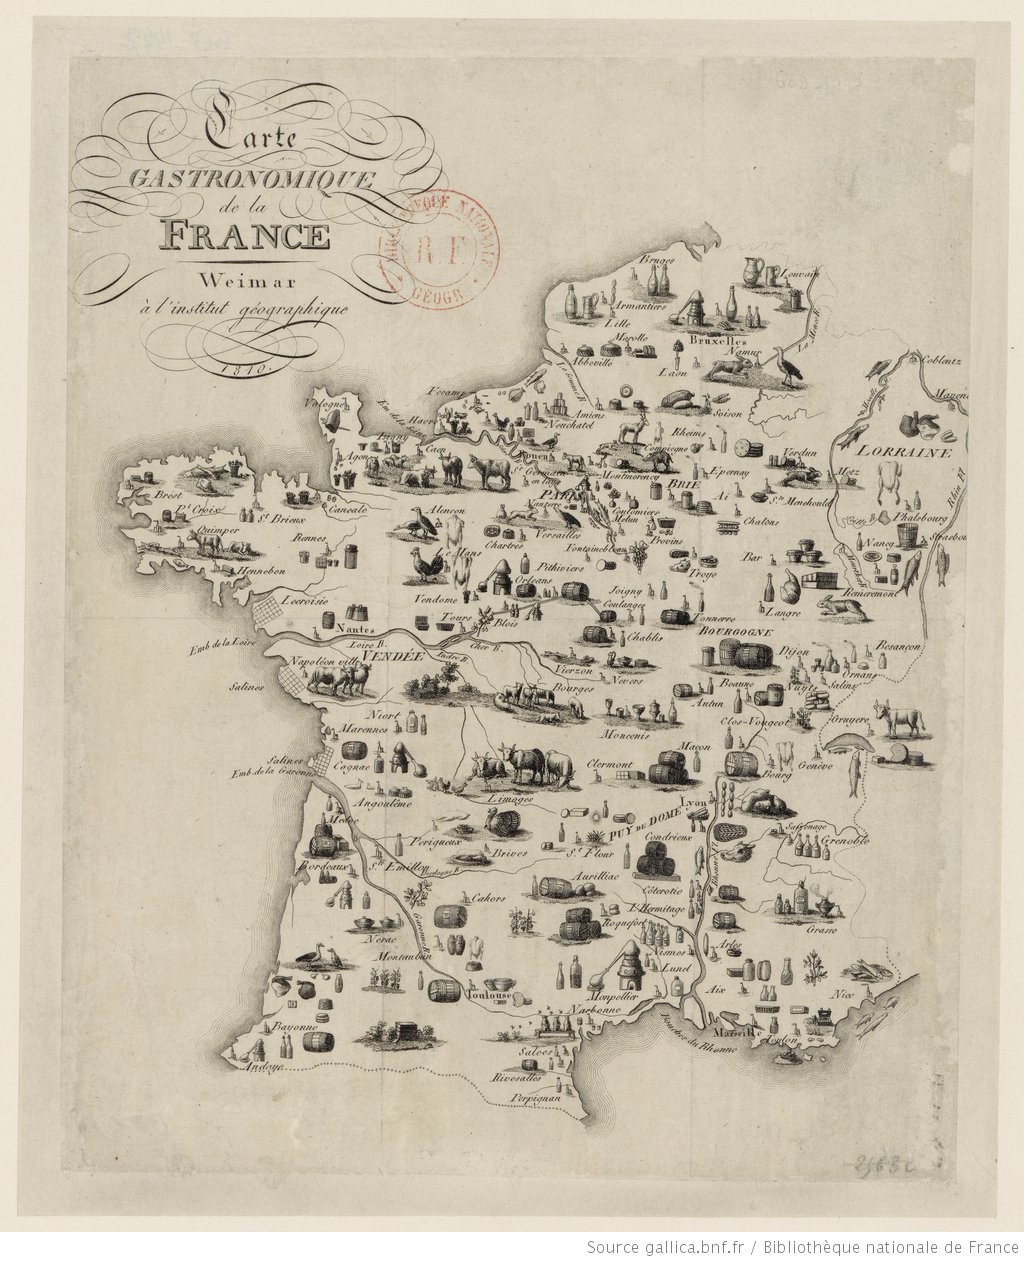 Fig. 1-4: http://lenamk.site/memoire/Redaction/img/CarteGastronomique_1810.jpeg